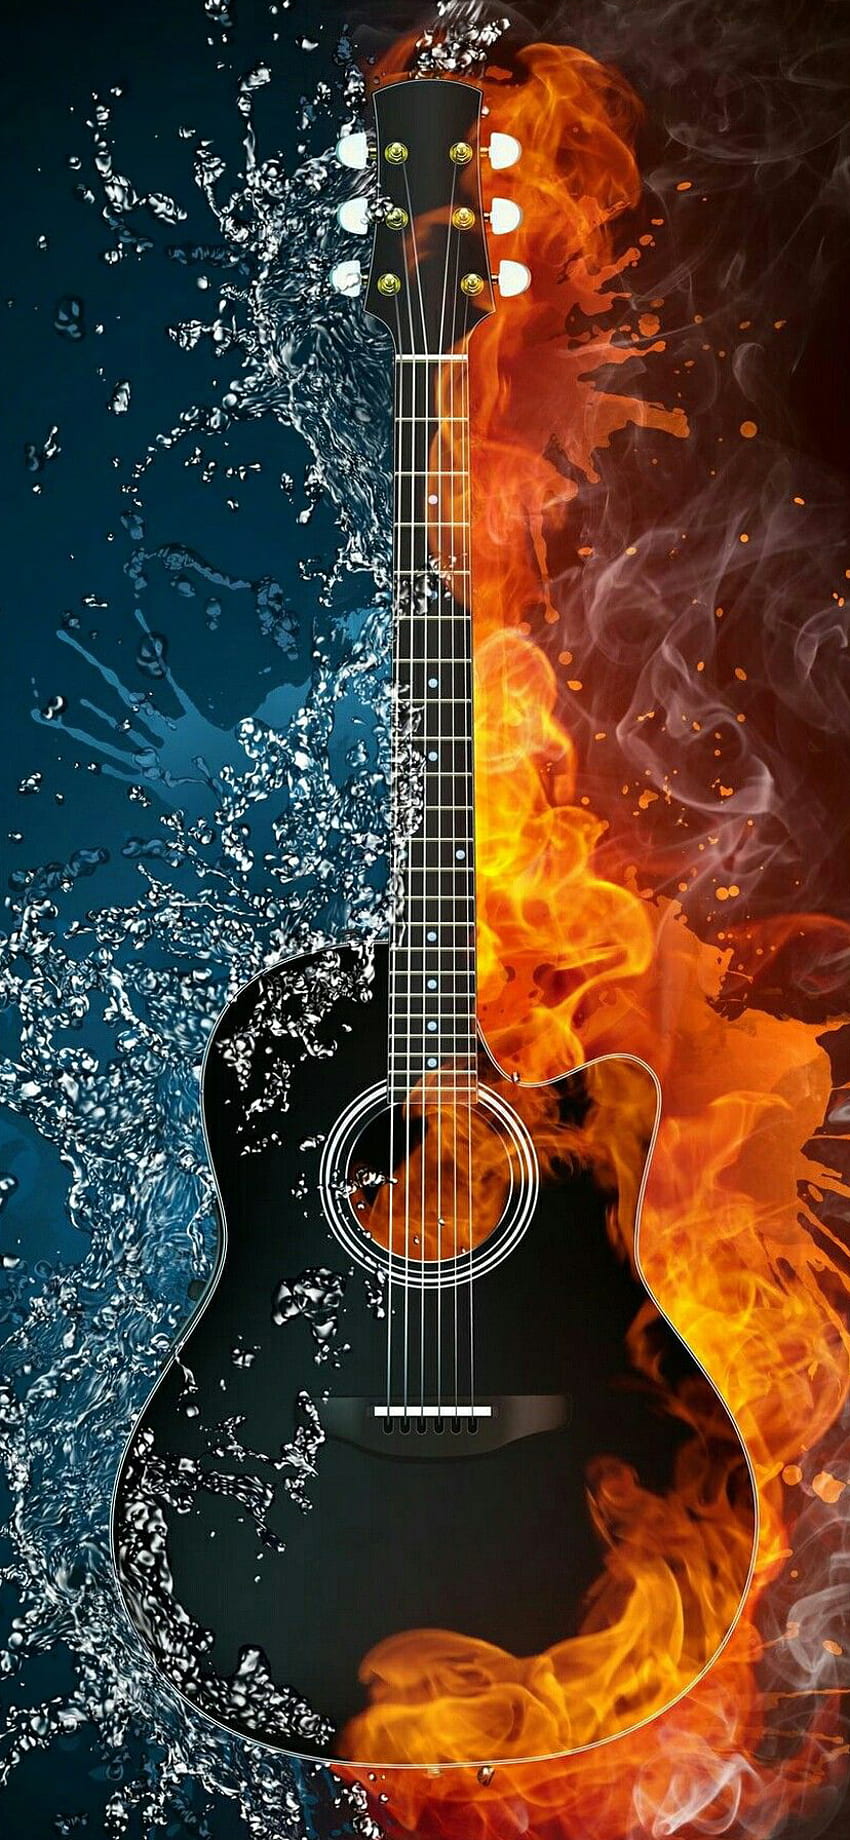 Flaming Guitar iPhone Wallpapers Free Download